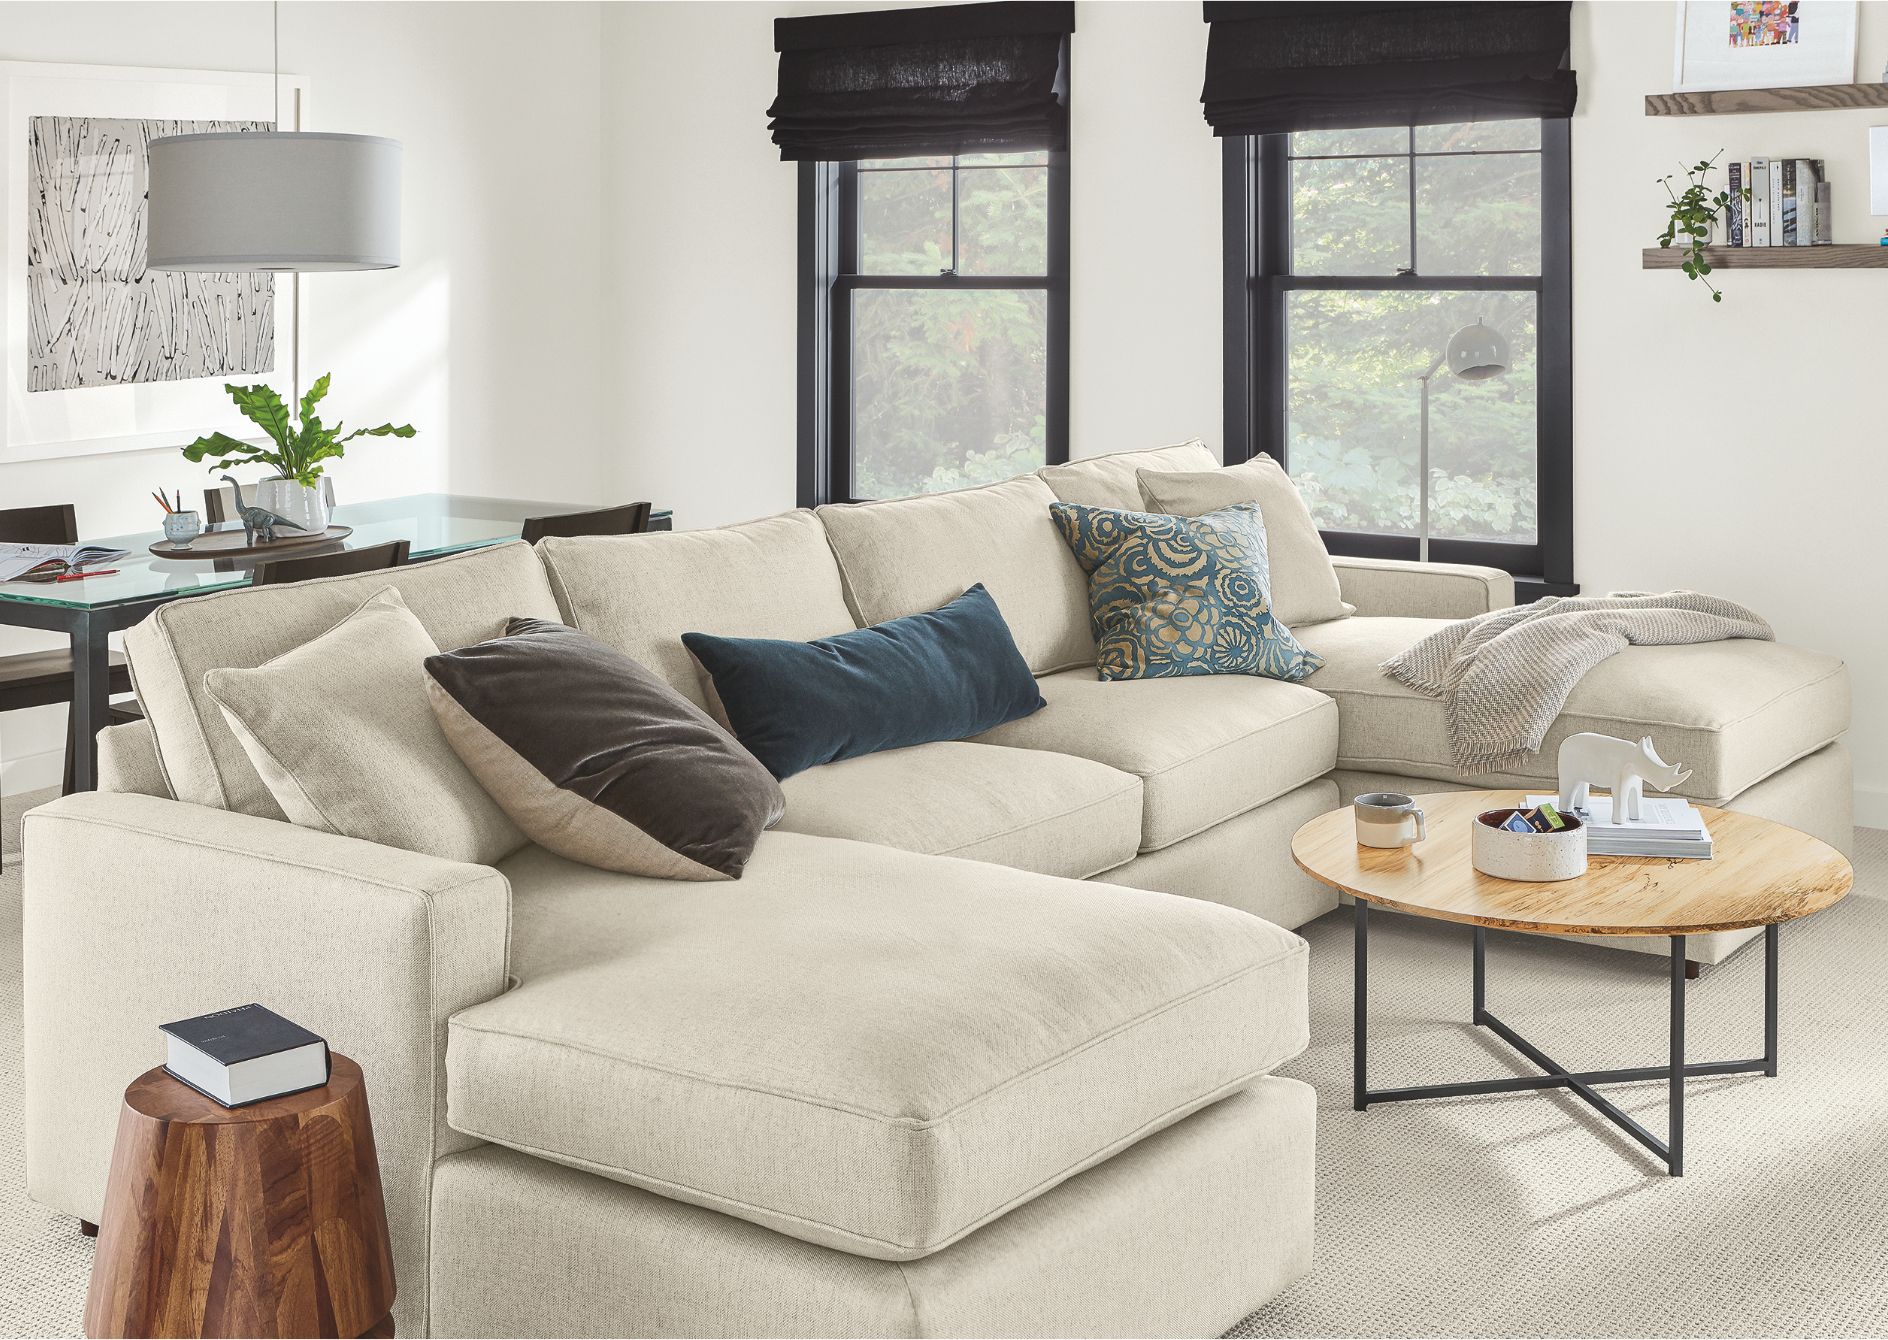 diy living room seating ideas